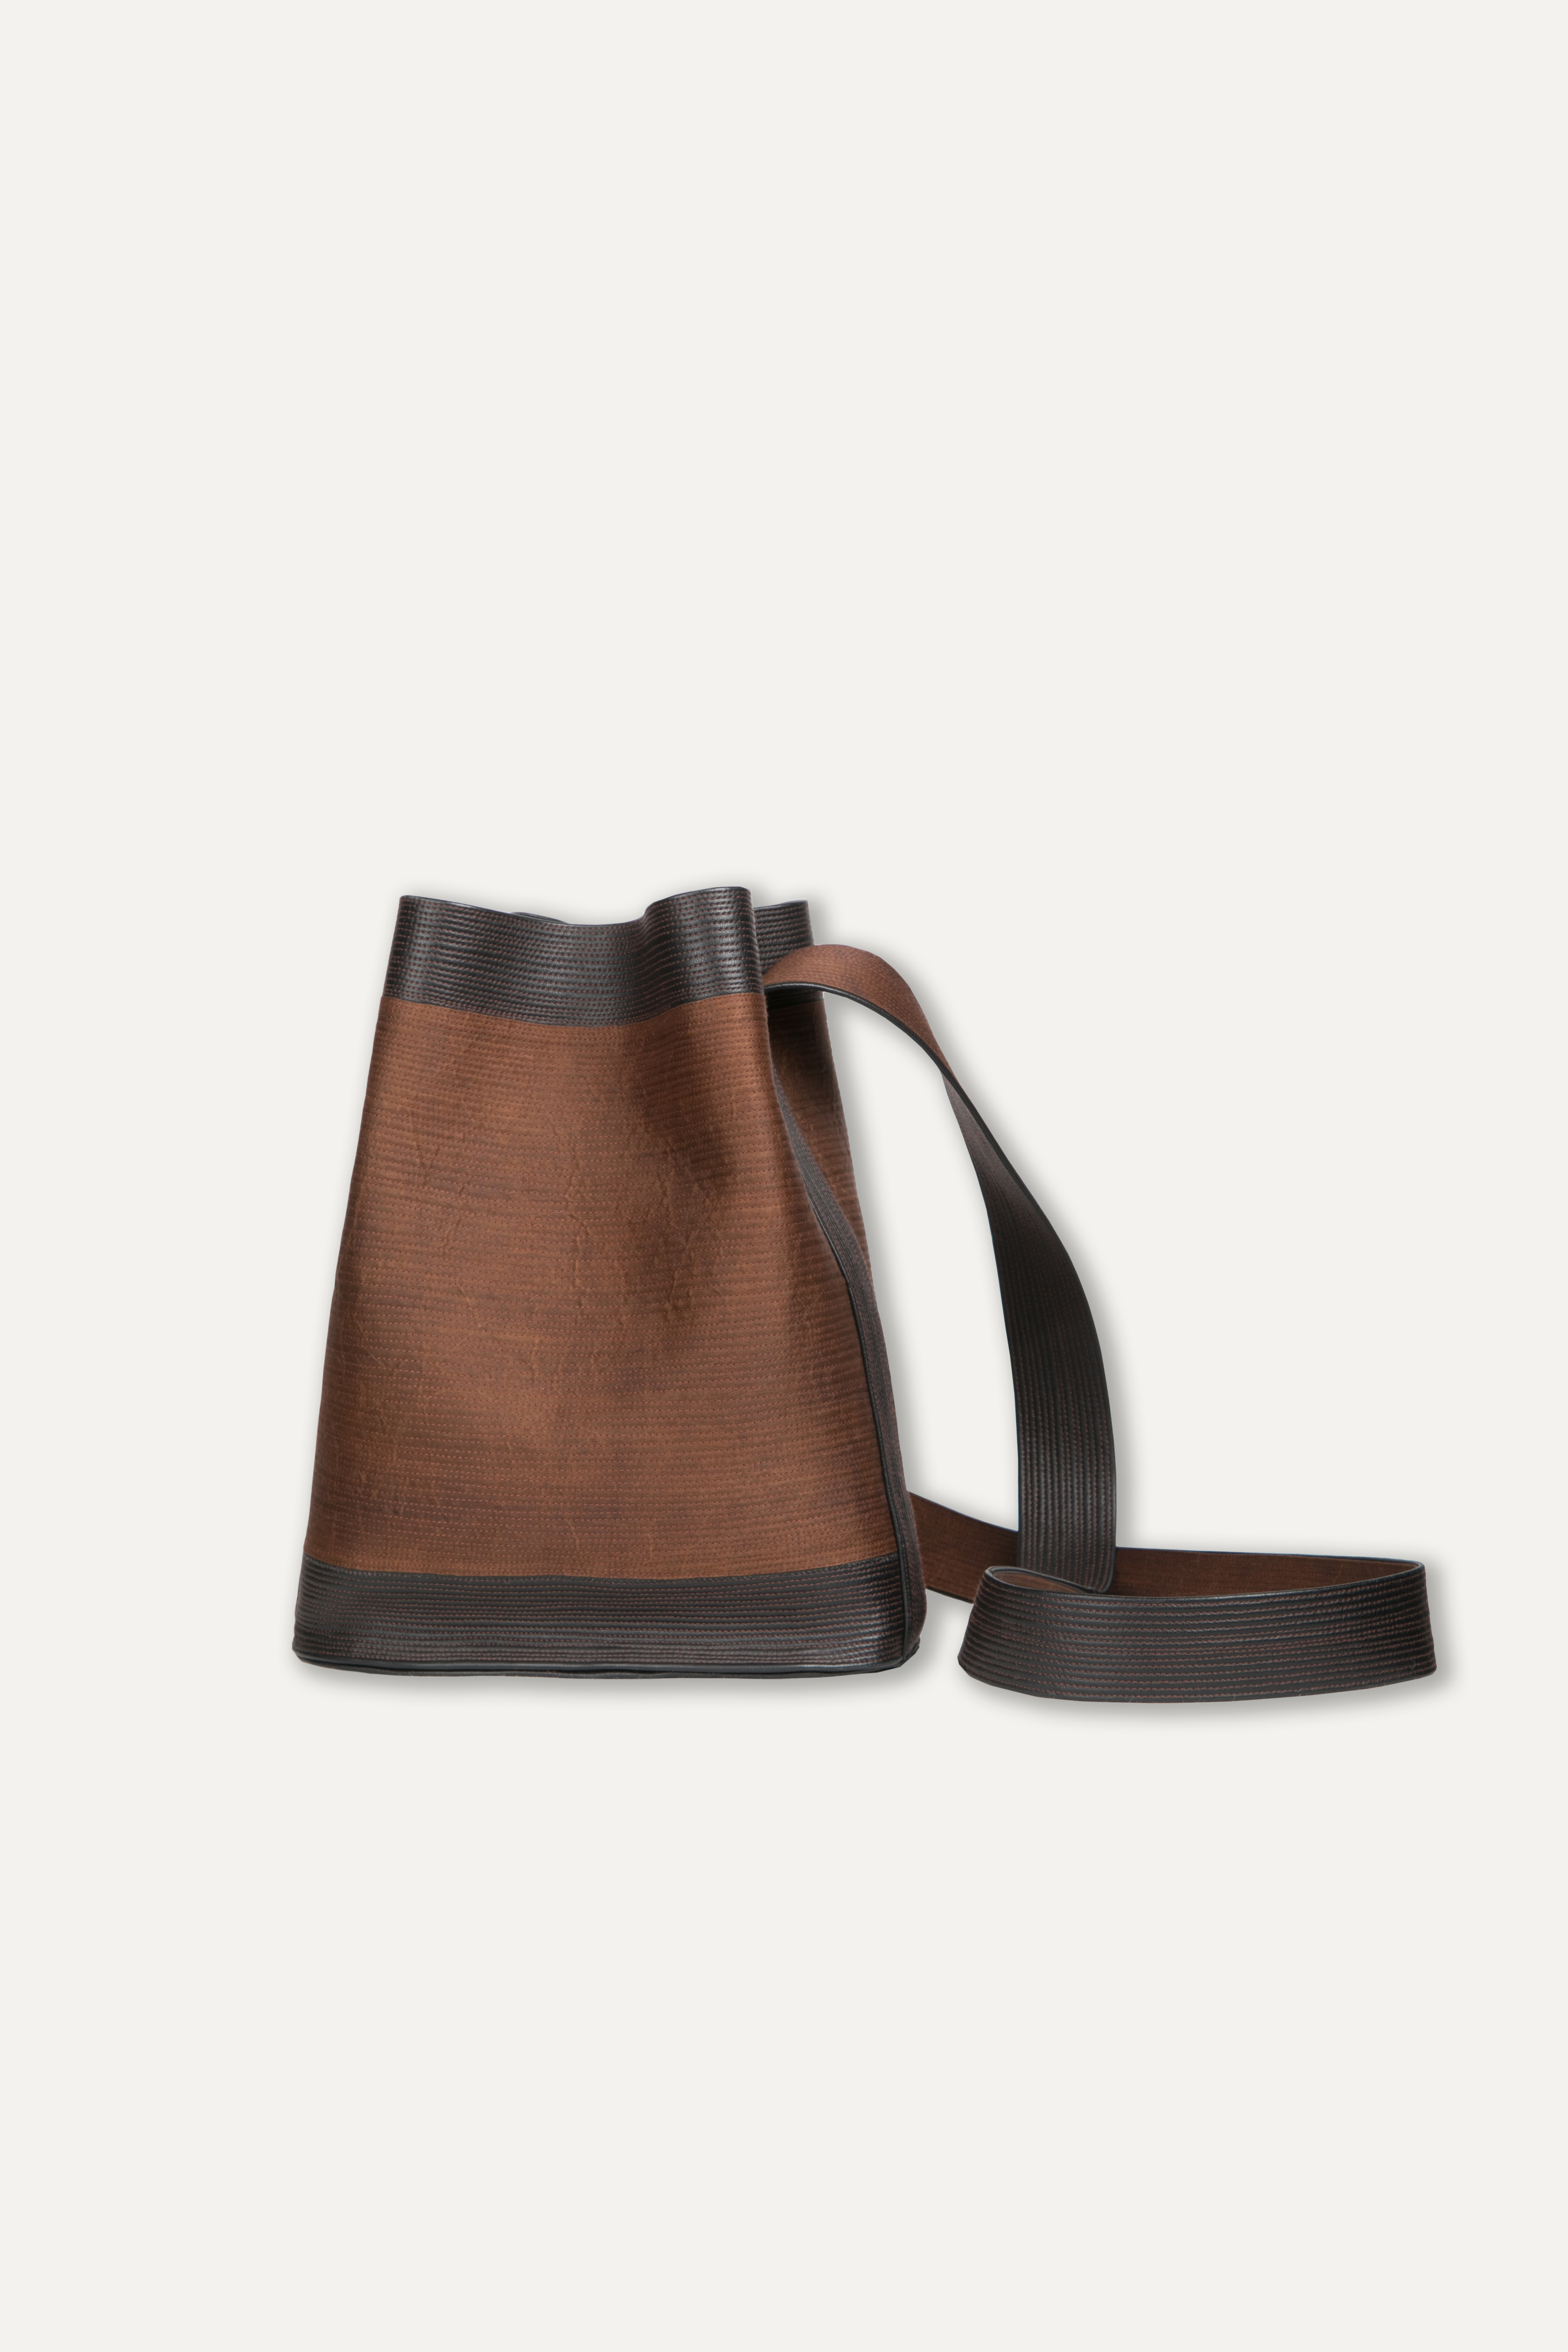 teasilk with leather trim bucket bag